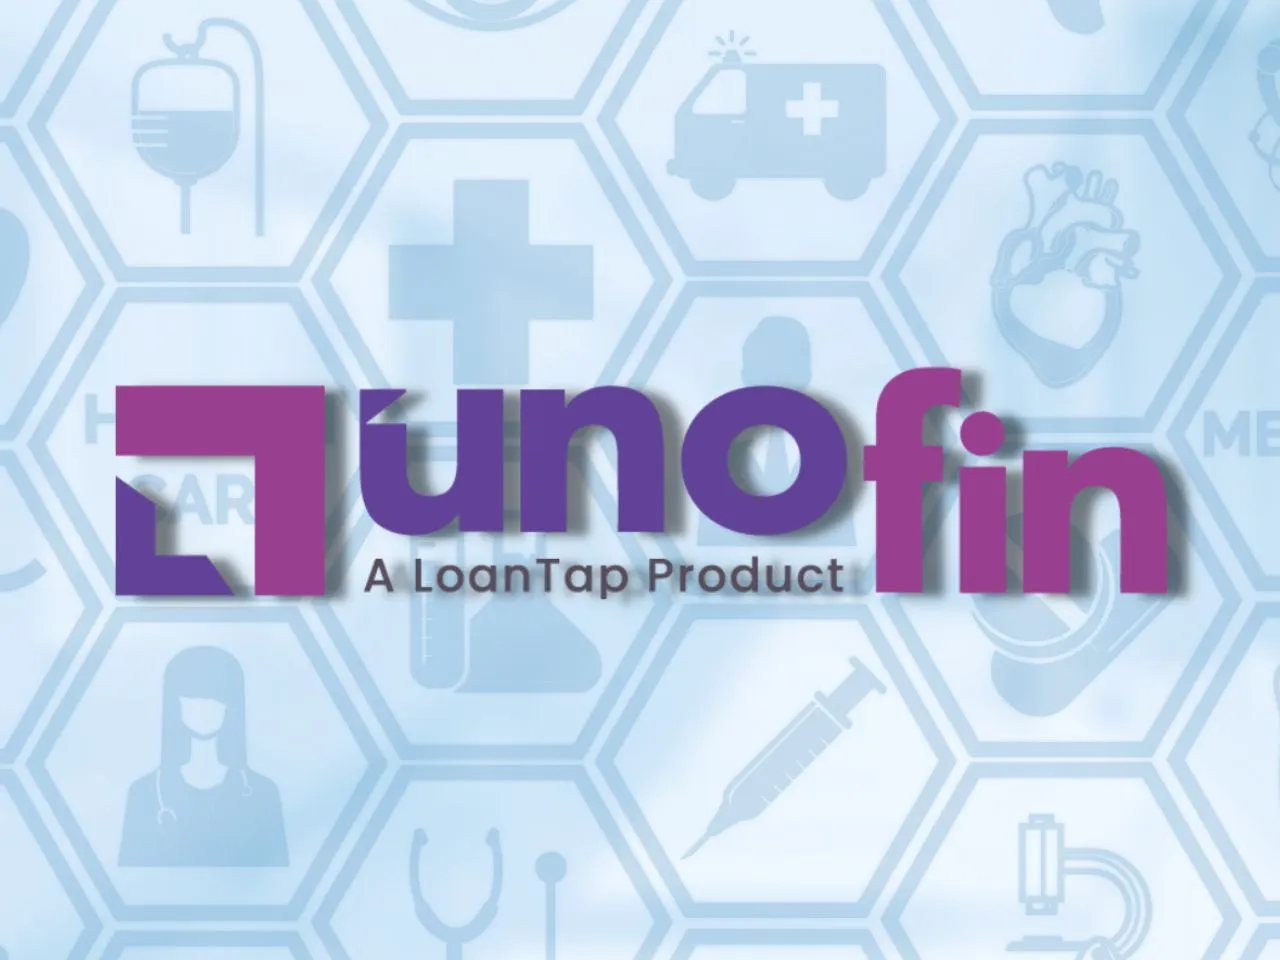 LoanTap Unofin New Brand Identity Healthcare Finance